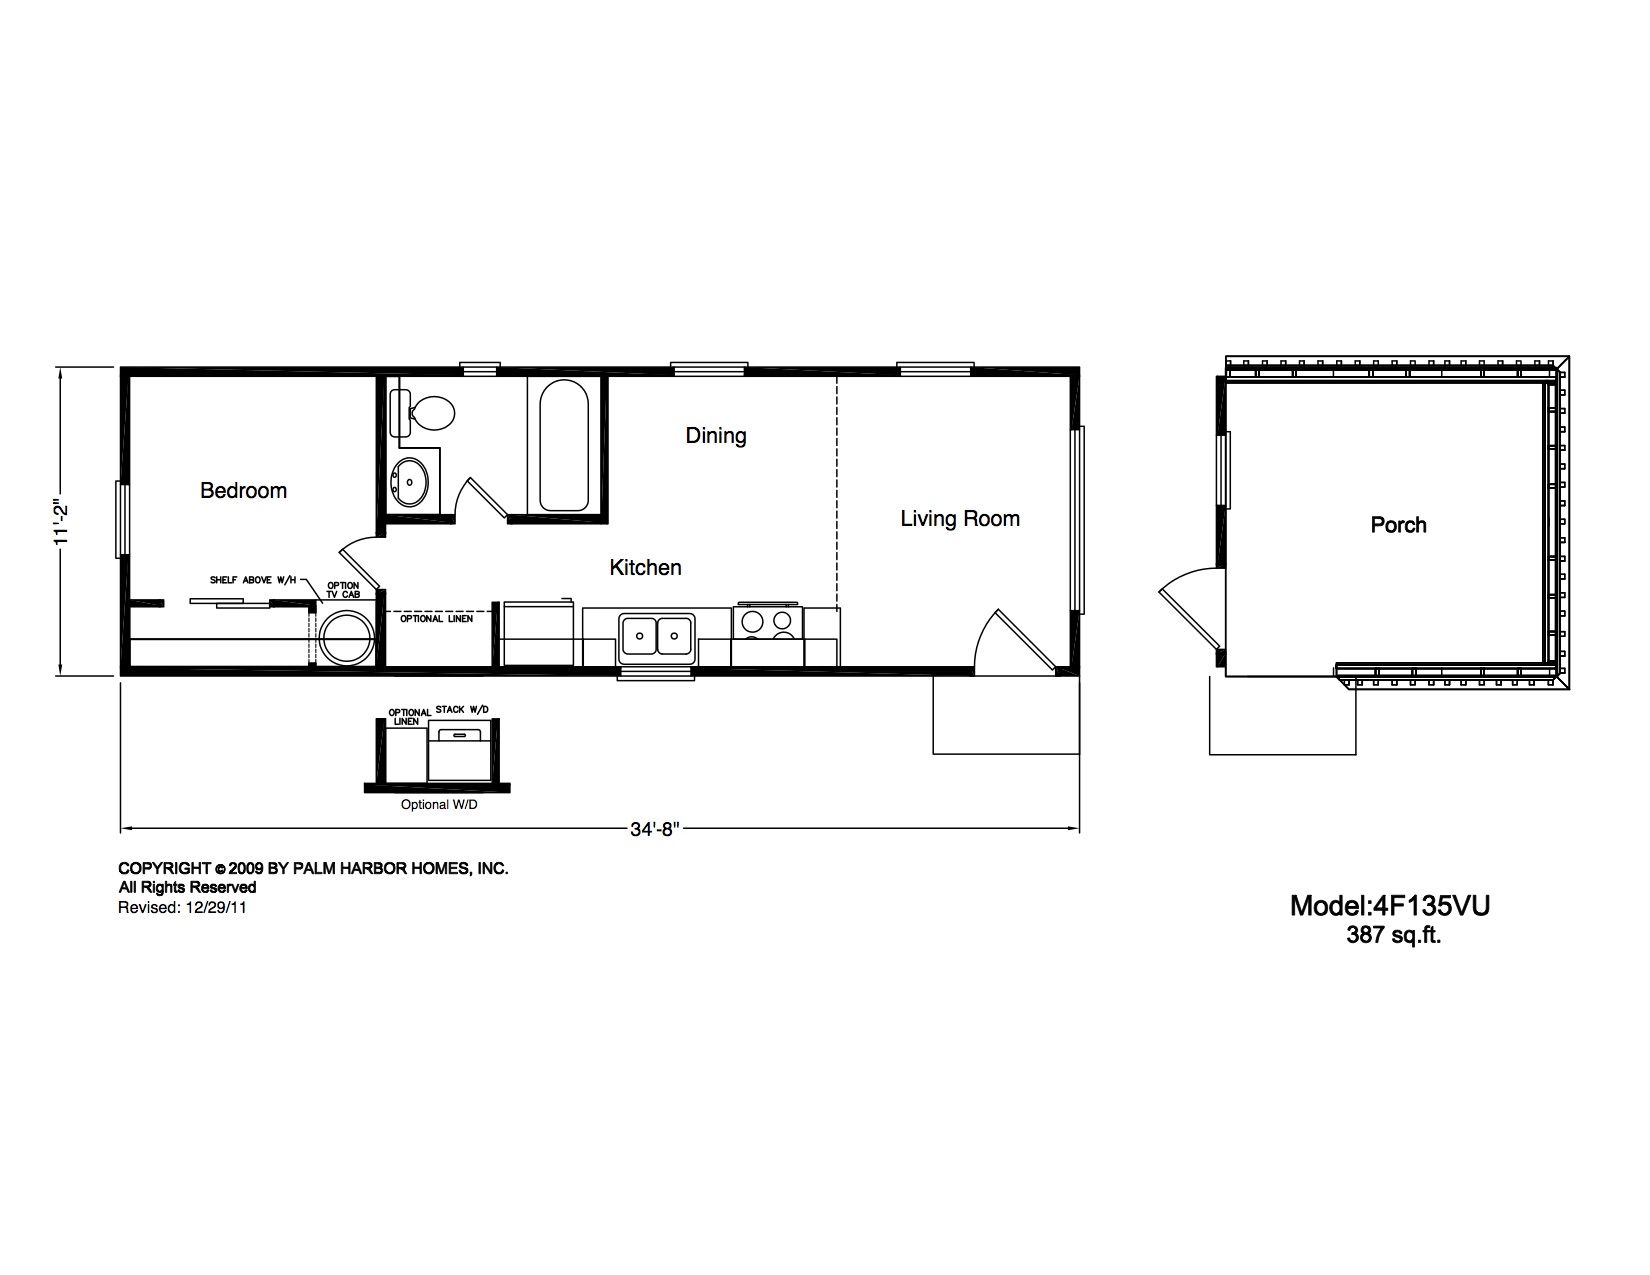 Homes Direct Modular Homes - Model 4F135VU - Floorplan